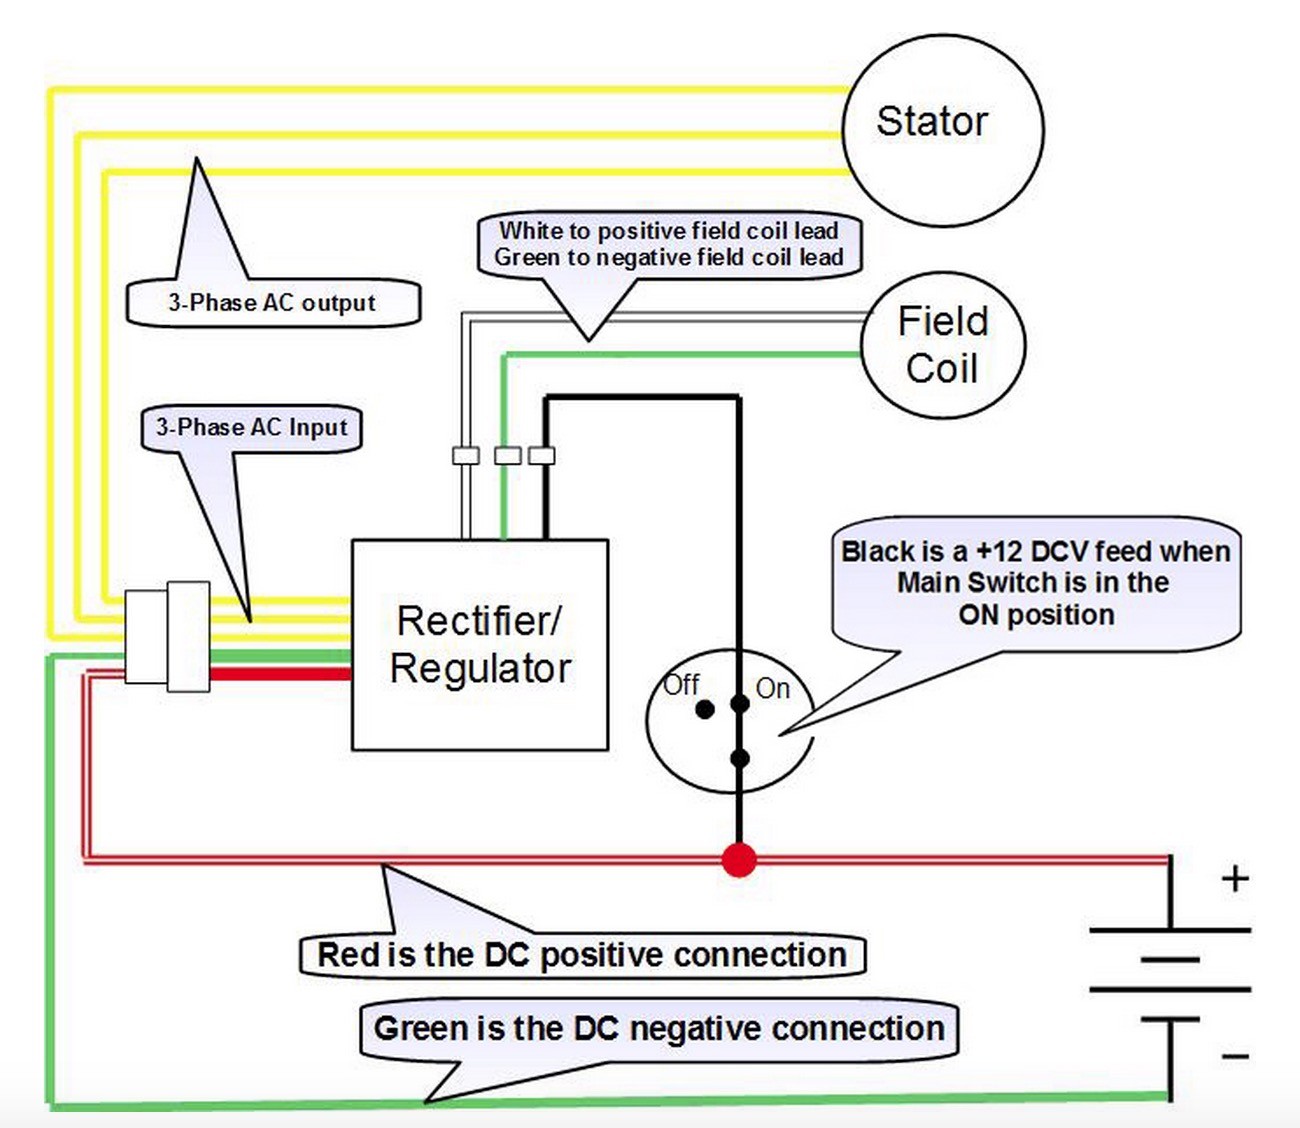 Harley Davidson Voltage Regulator Wiring Diagram